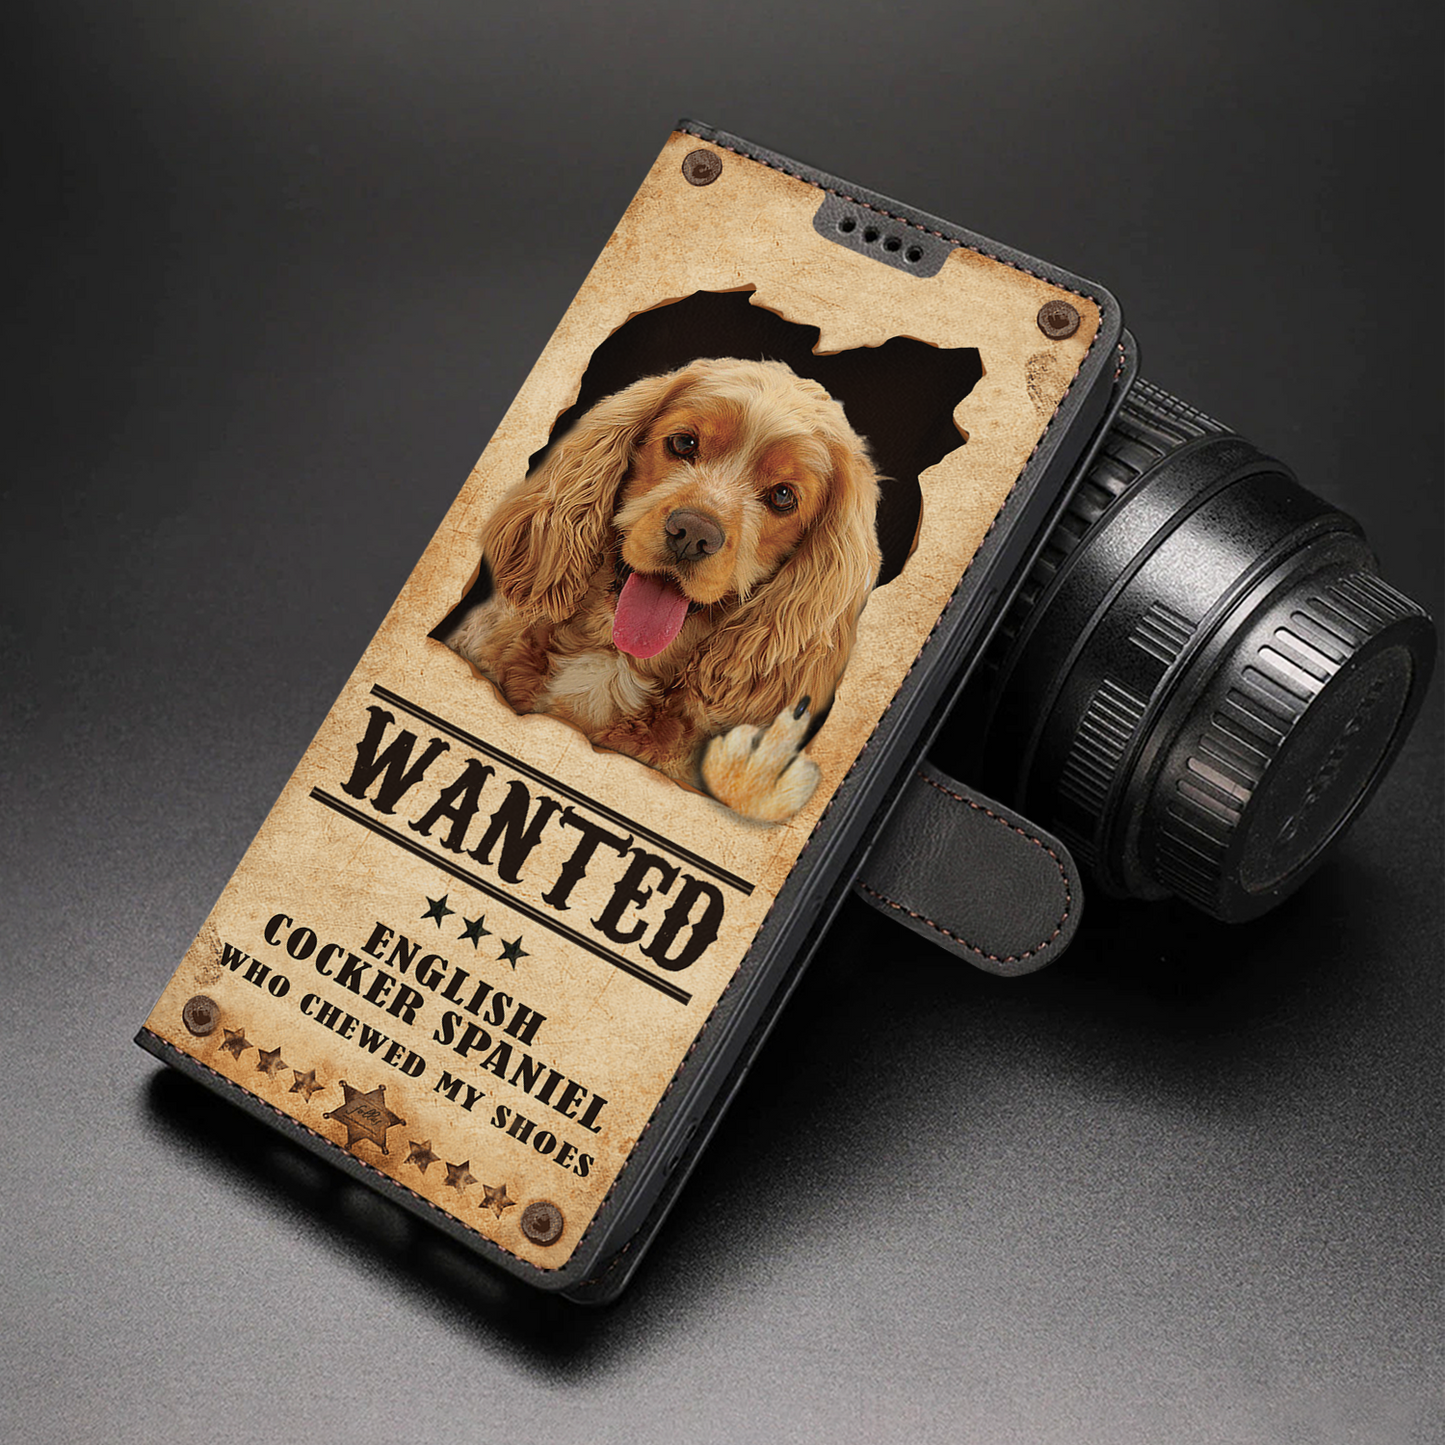 English Cocker Spaniel Wanted - Fun Wallet Phone Case V1